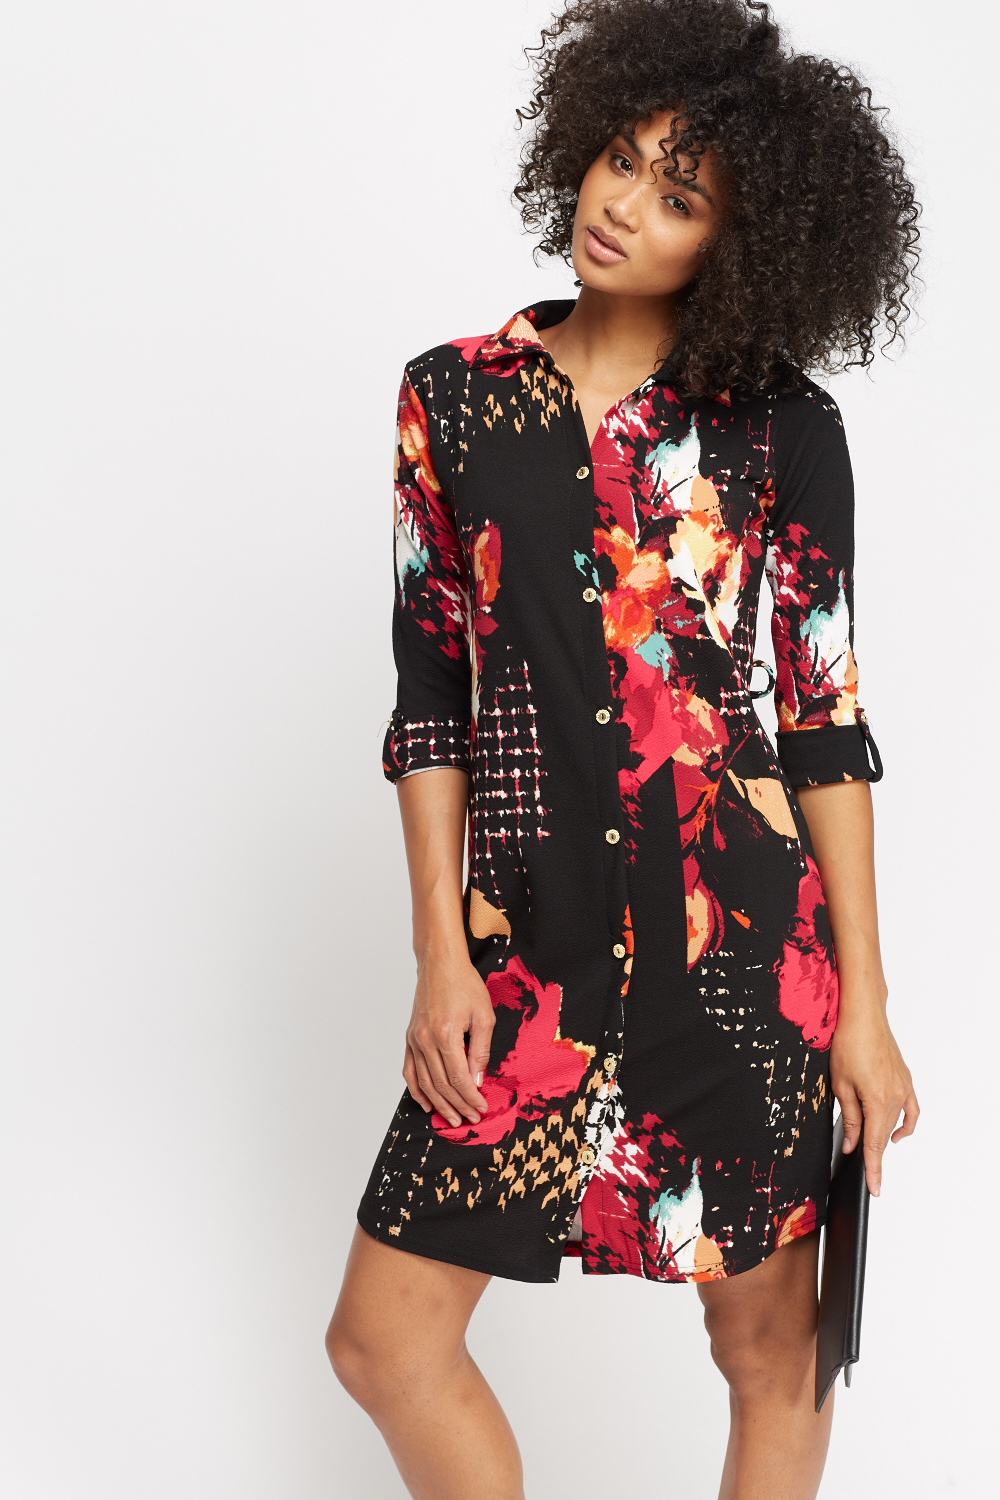 Floral Print Shirt Dress - Just $7